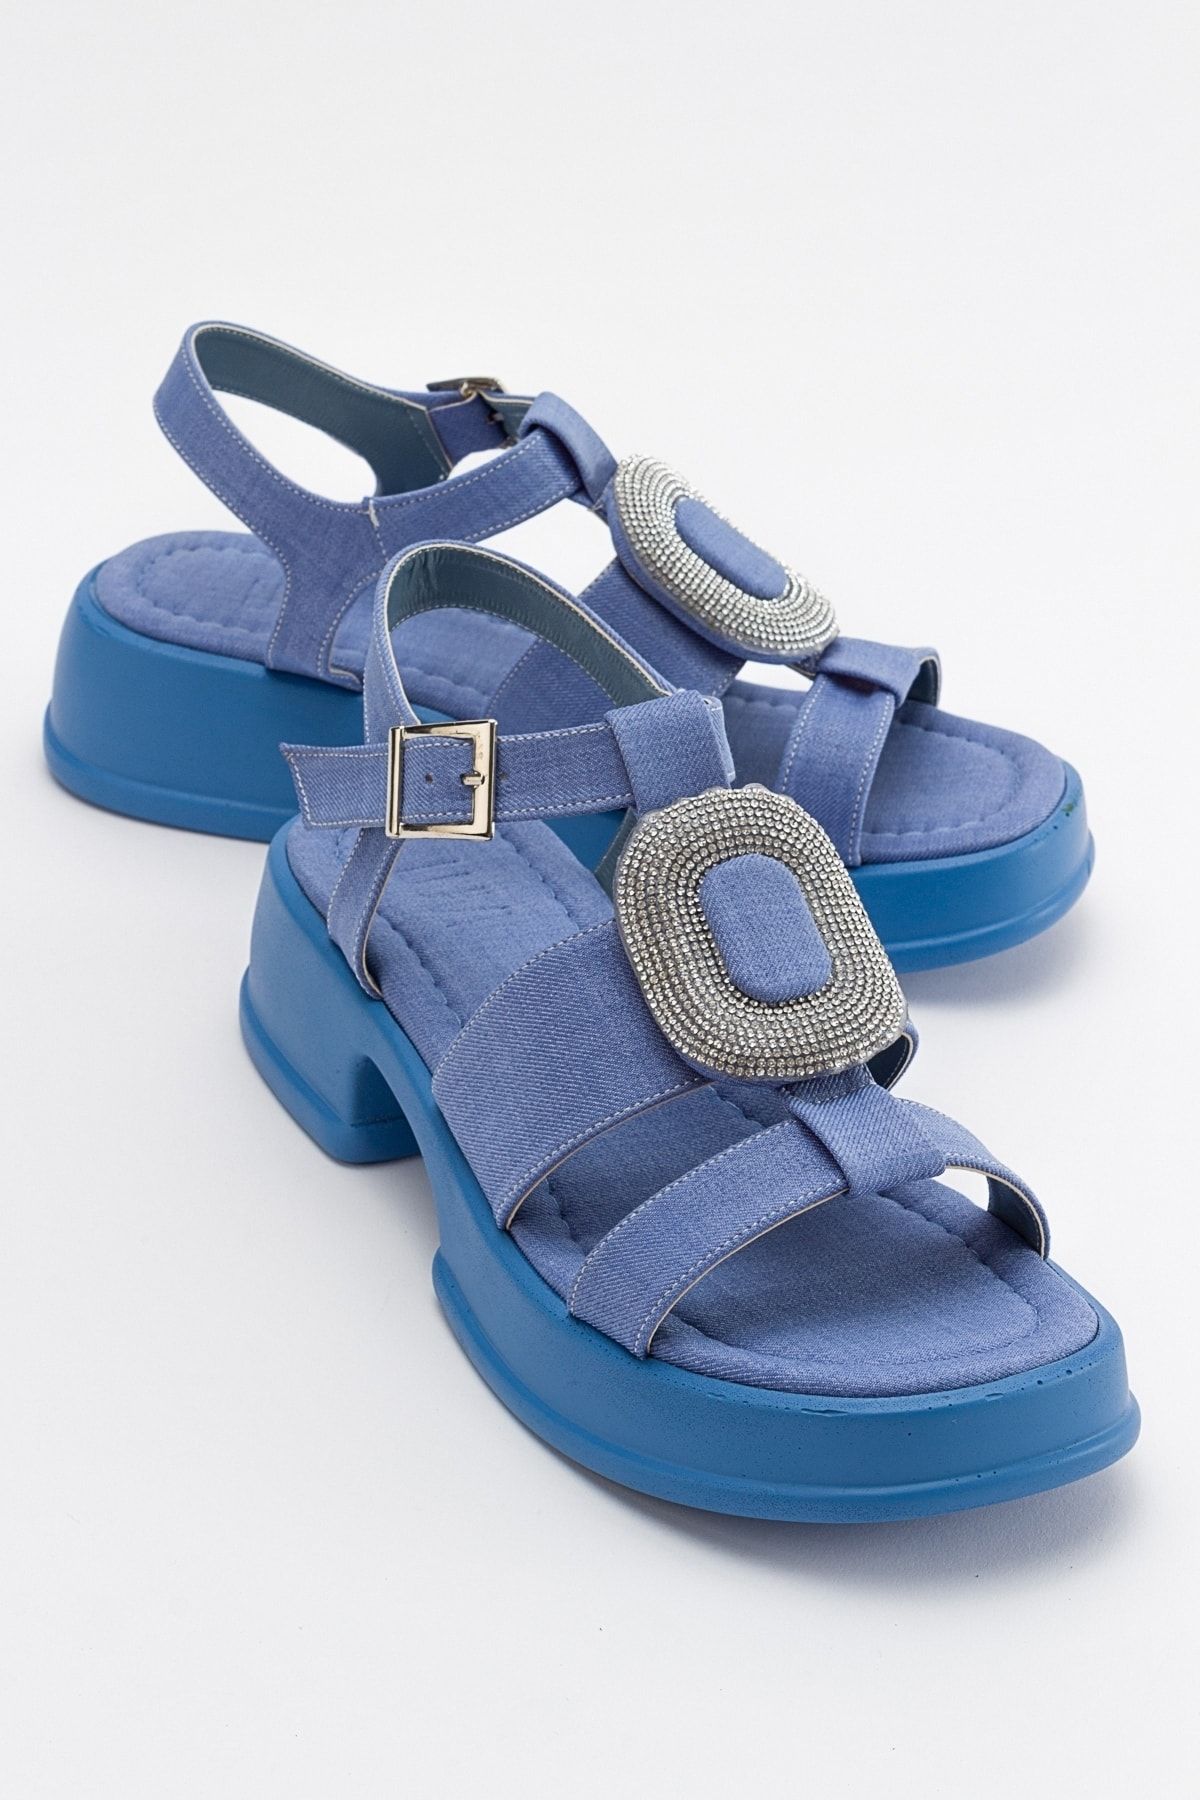 luvishoes Redy Kot Mavi Kadın Sandalet